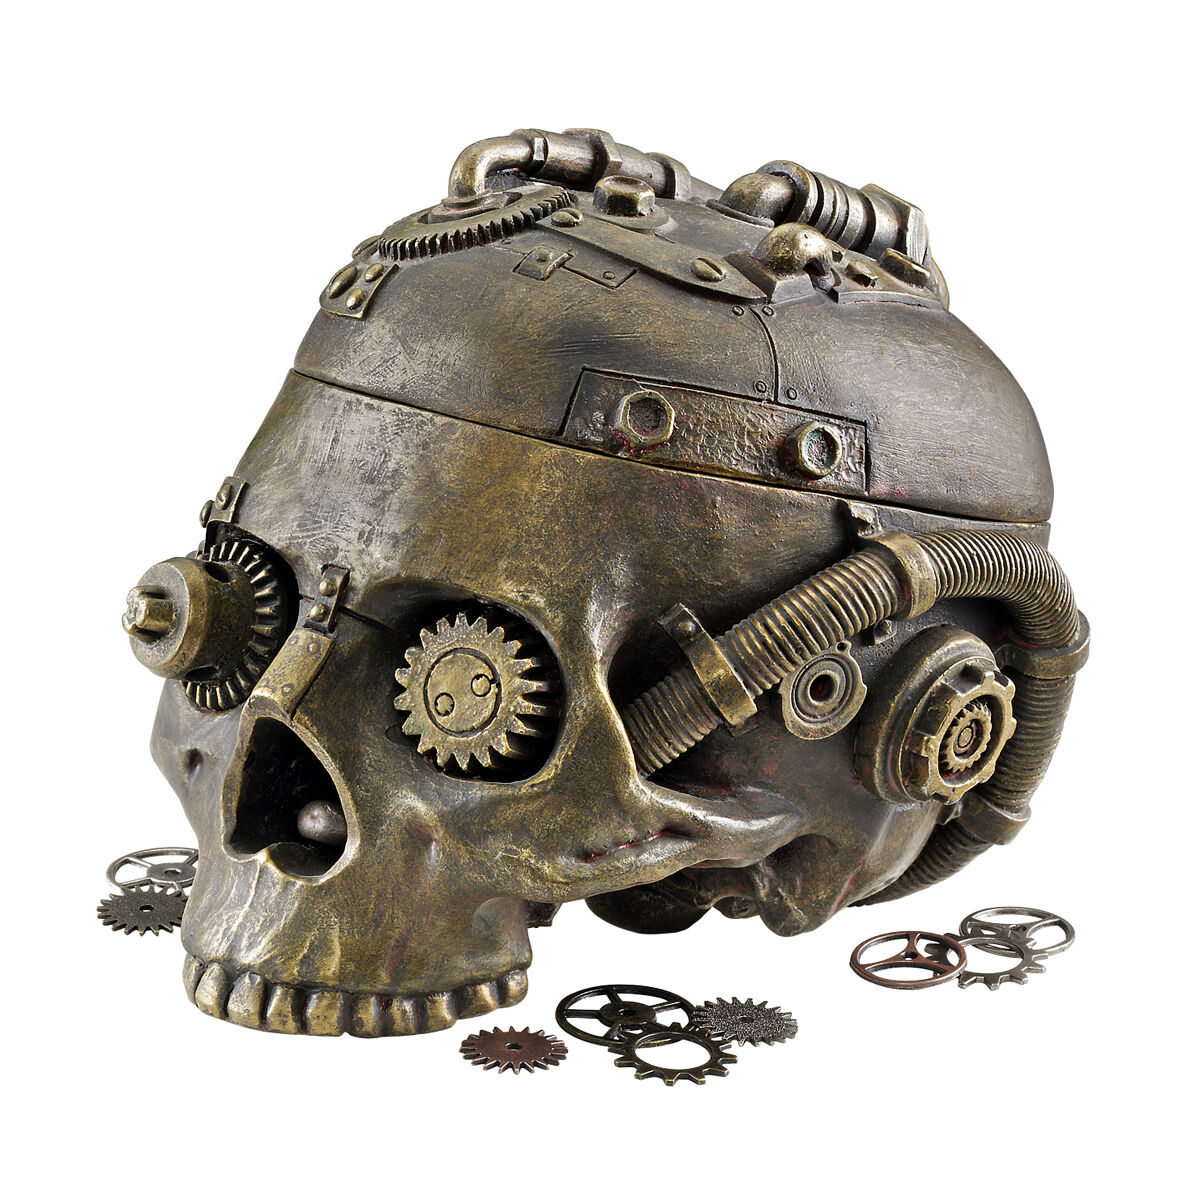 Steampunk Cogs & Gears Industrial Age Victorian Skull Vessel Treasure Container